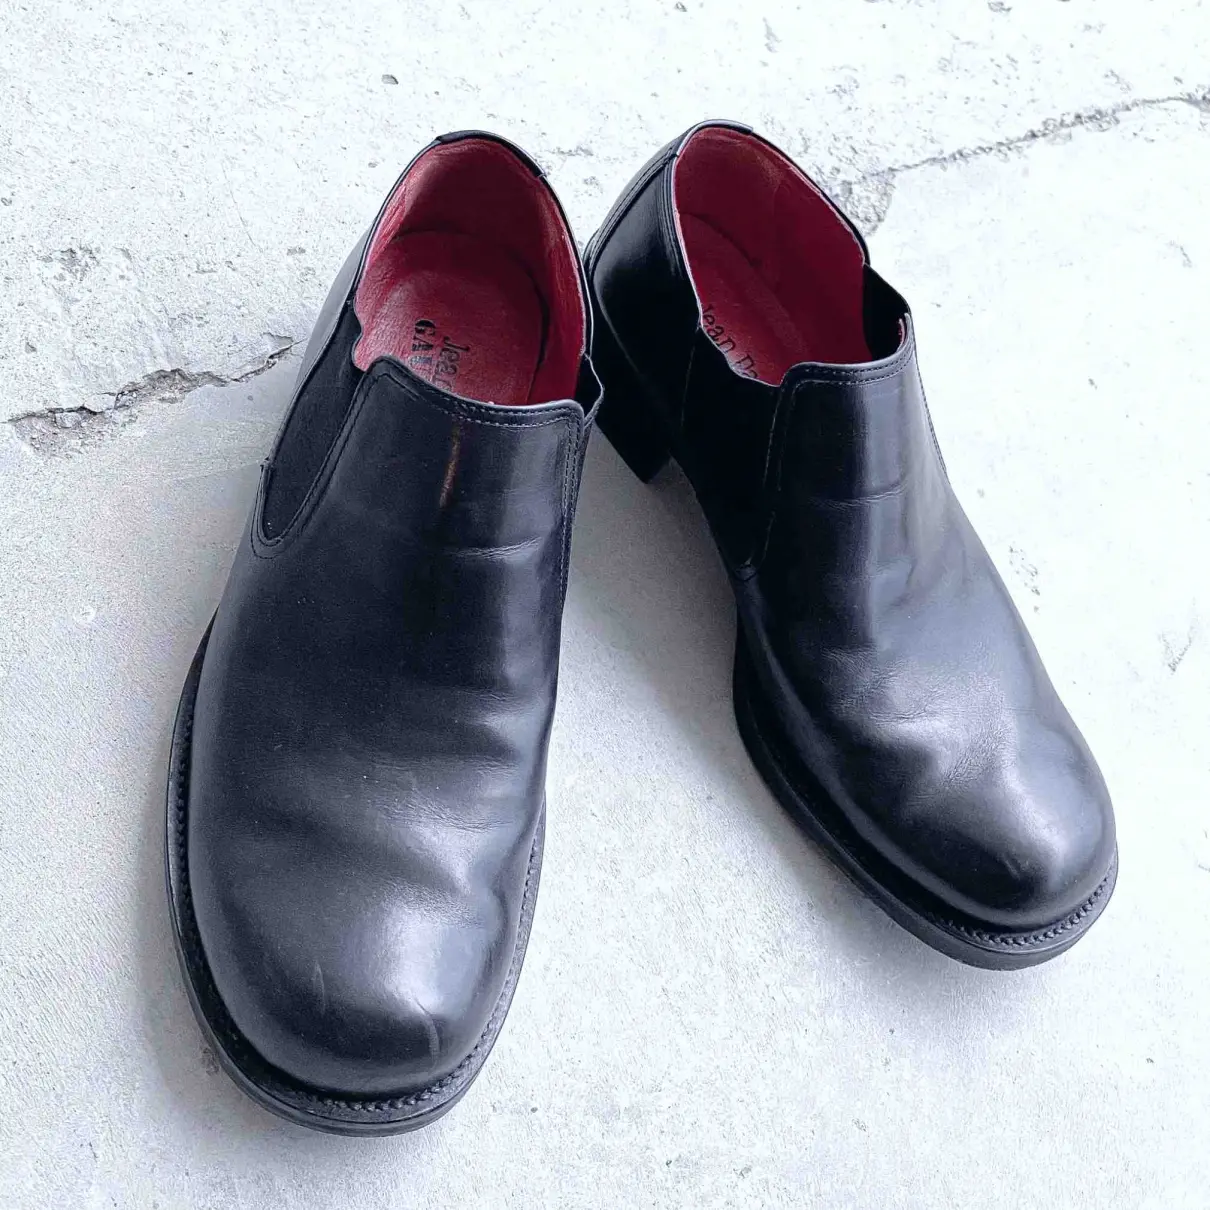 Buy Jean Paul Gaultier Leather boots online - Vintage